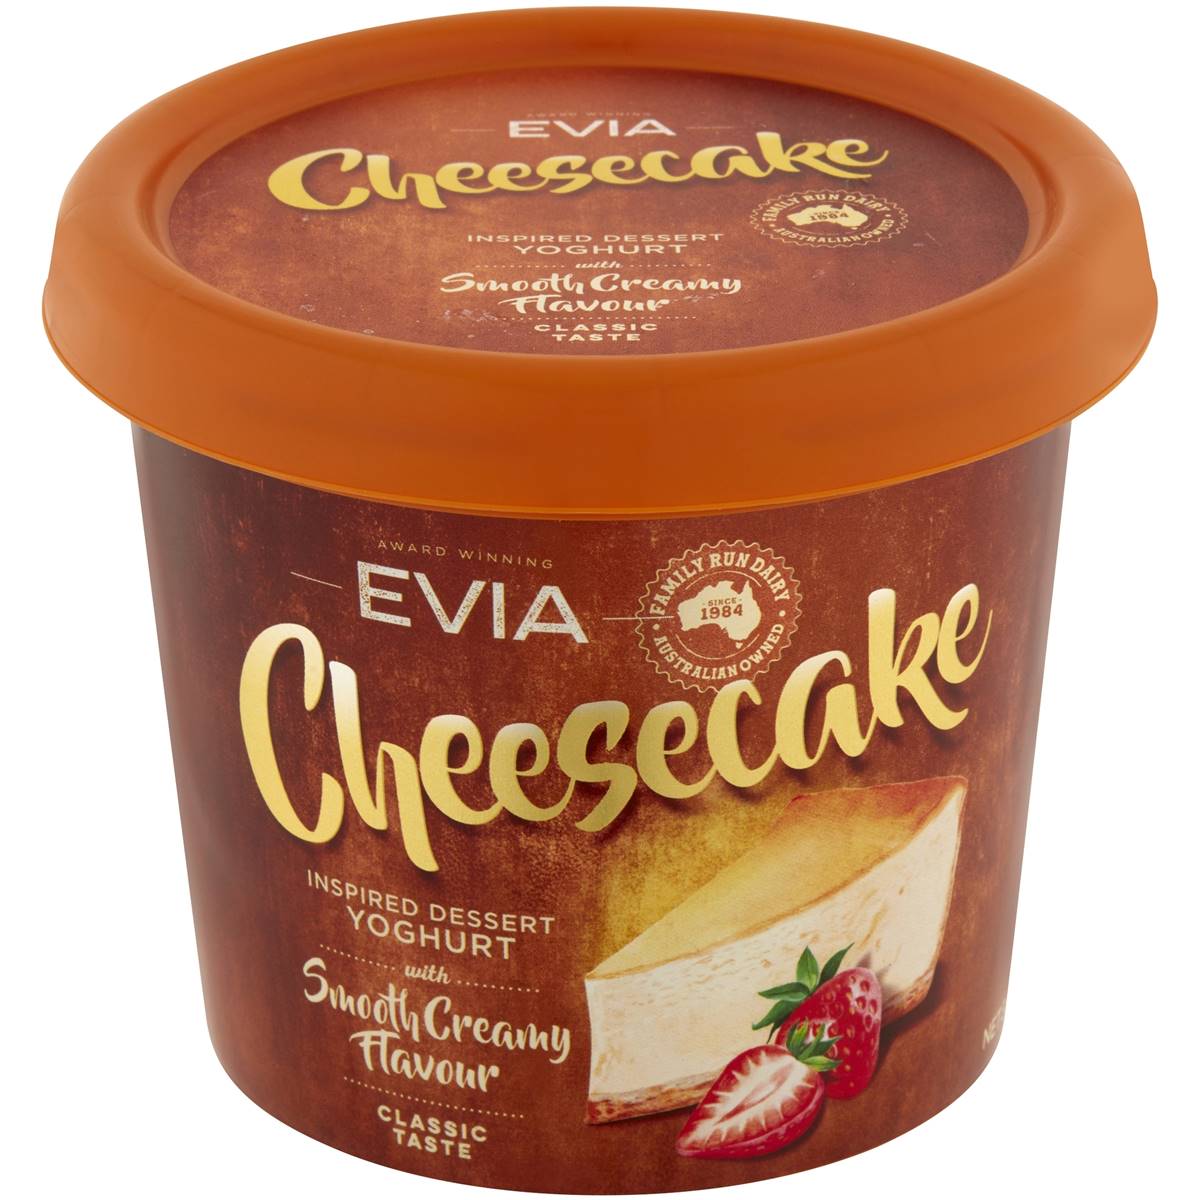 Calories in Evia Cheesecake Inspired Dessert Yoghurt